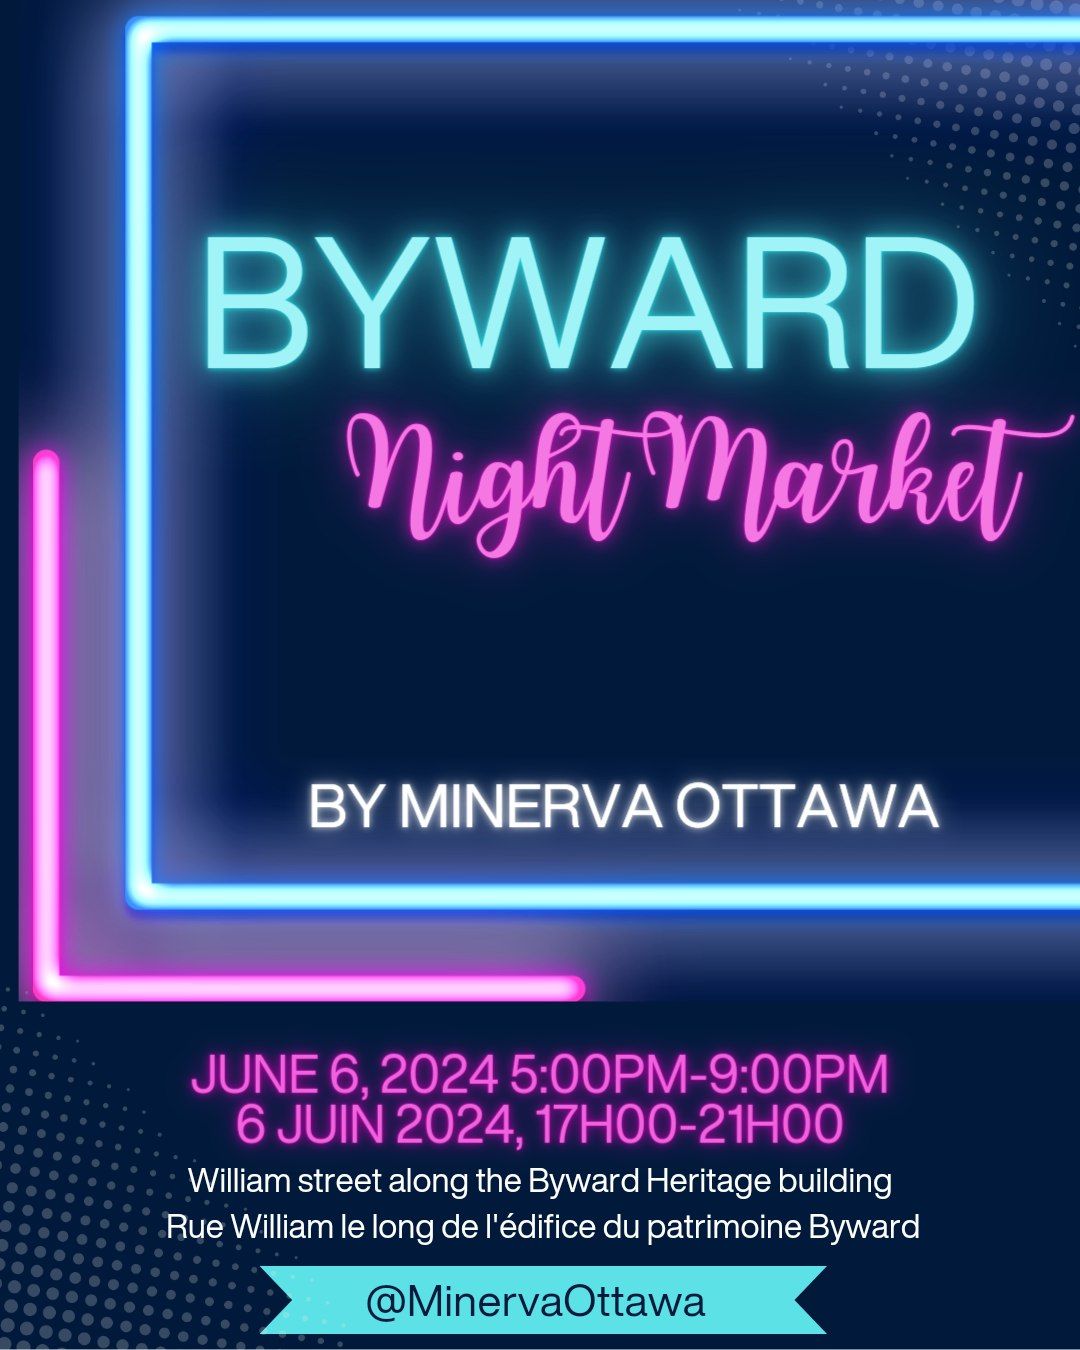 Byward Night Market By Minerva Ottawa